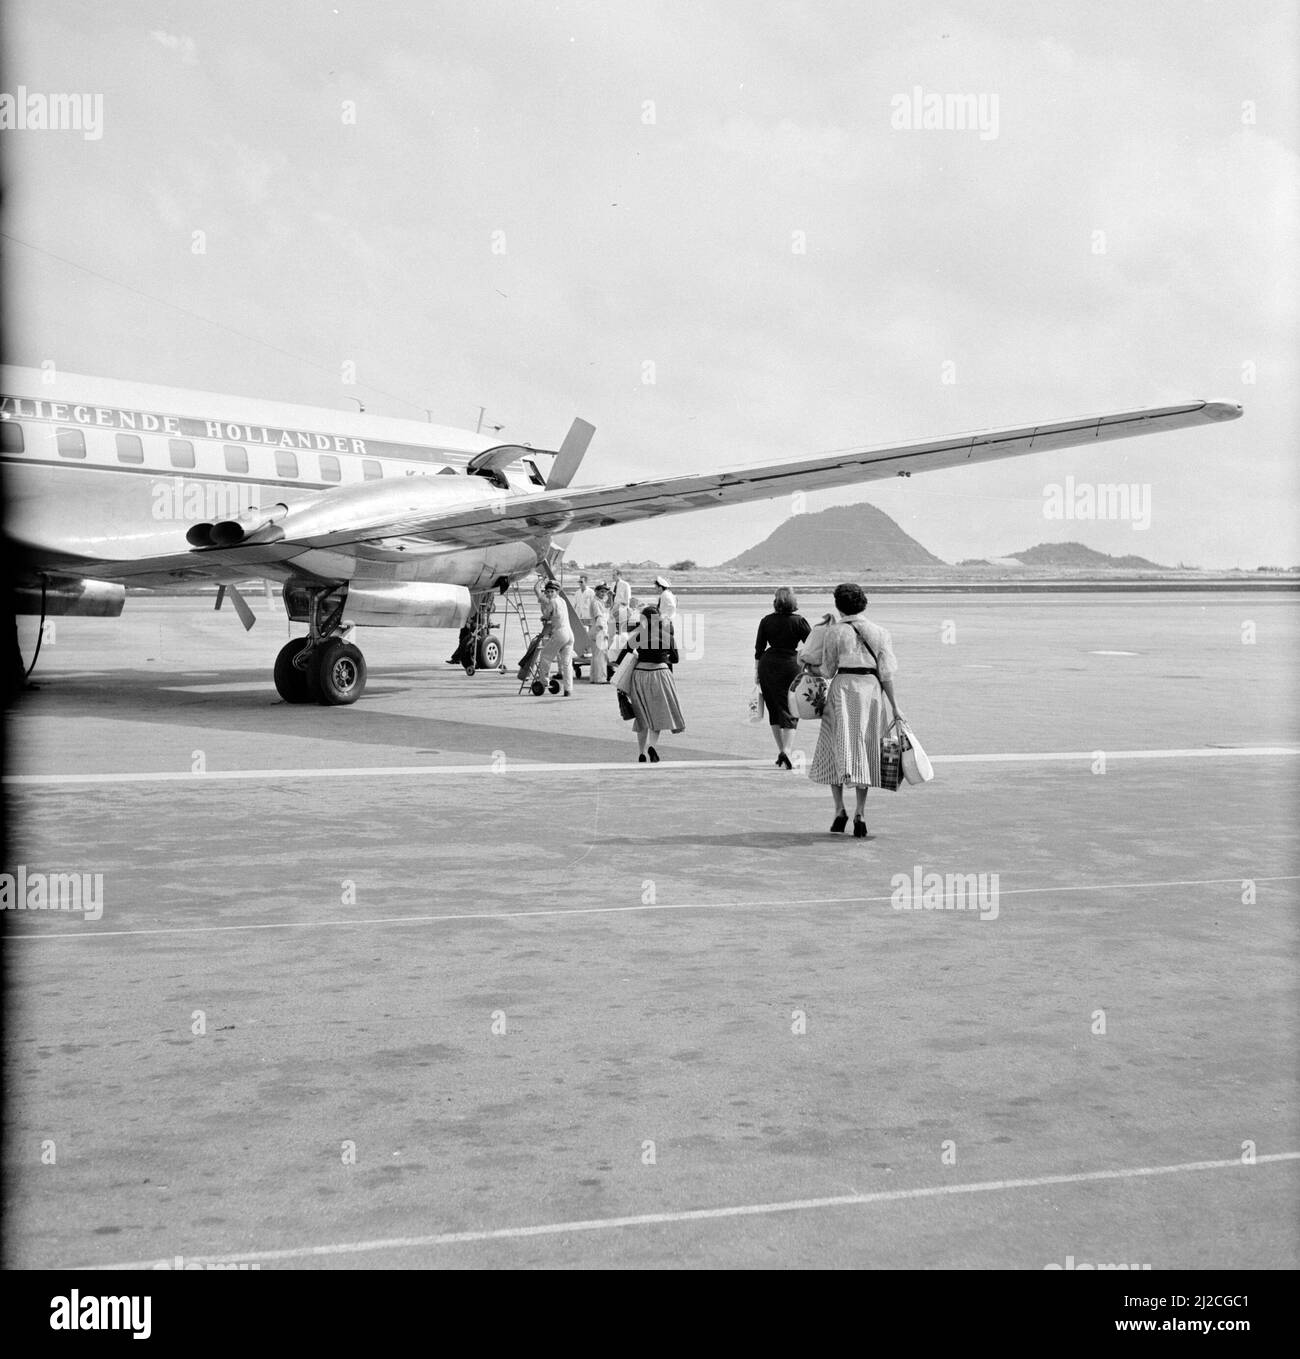 Princess Beatrix Airport on Aruba ca. October 1, 1955 Stock Photo - Alamy